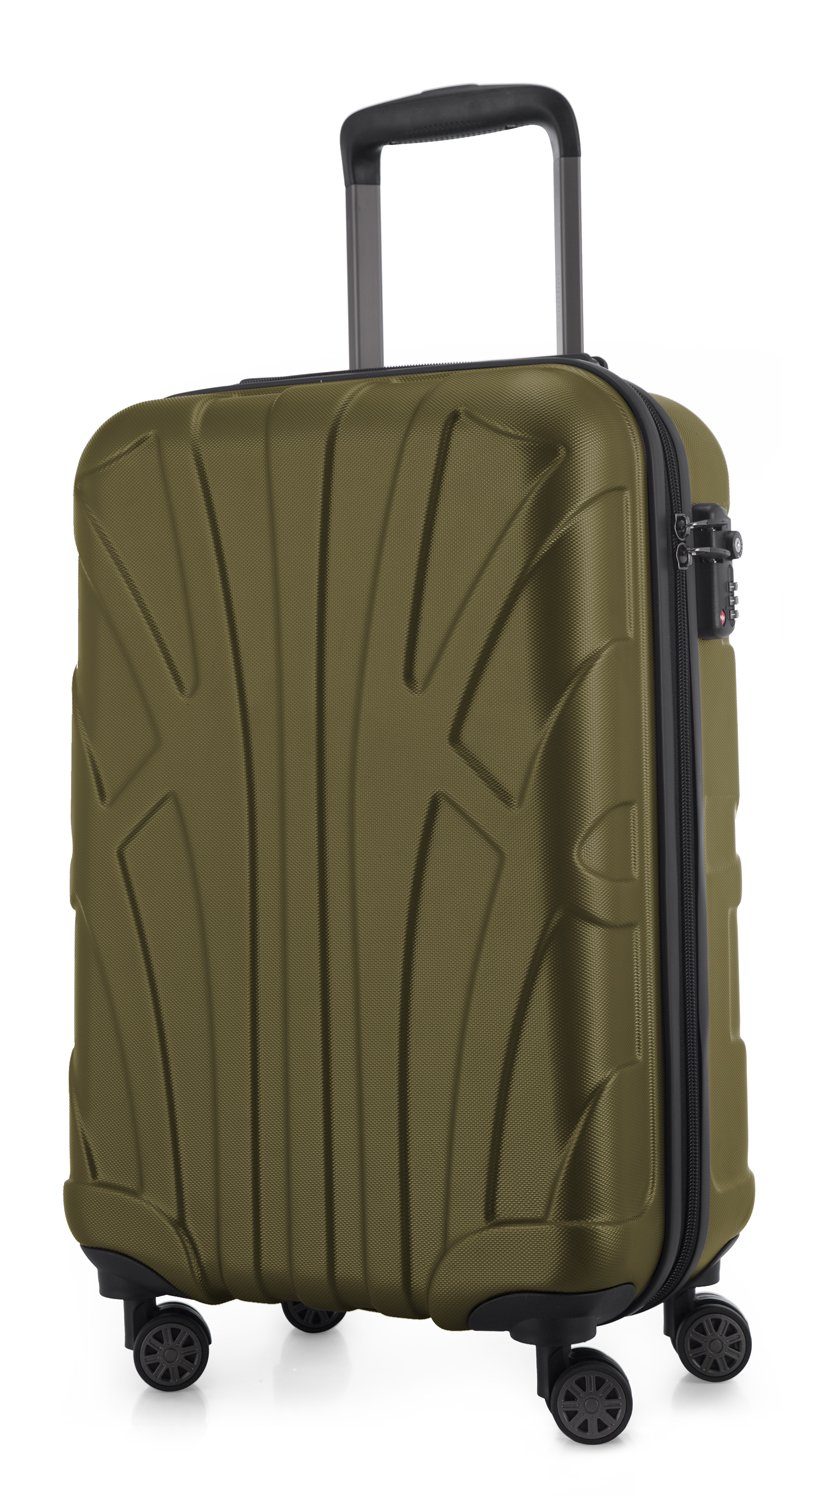 Silber Handgepäckkoffer Packvolumen Suitline Rollen, L Leicht, Zahlenschloss, 33 55 Robust, cm, TSA 4 S1,